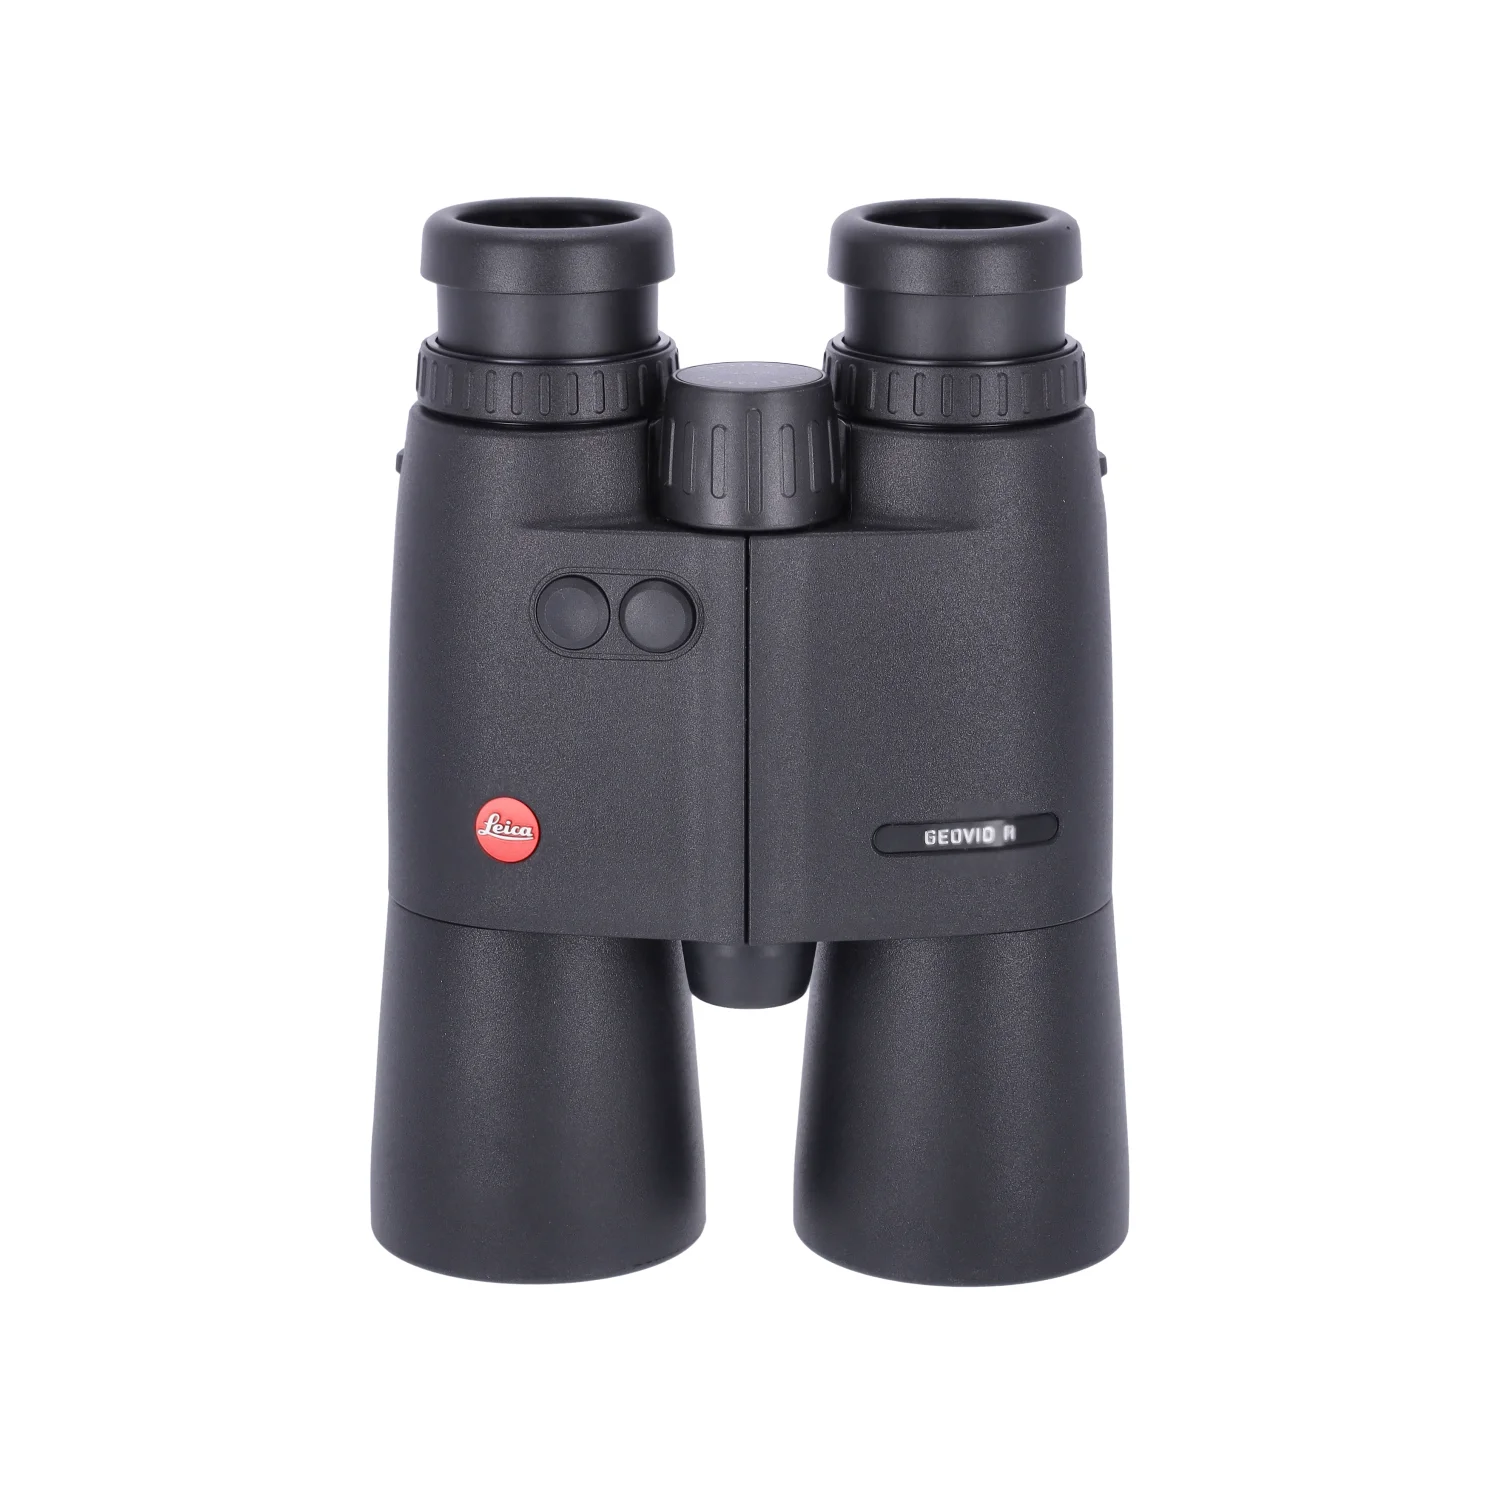 Leica Geovid R 8×56 Fernglas mit Entfernungsmesser im Test